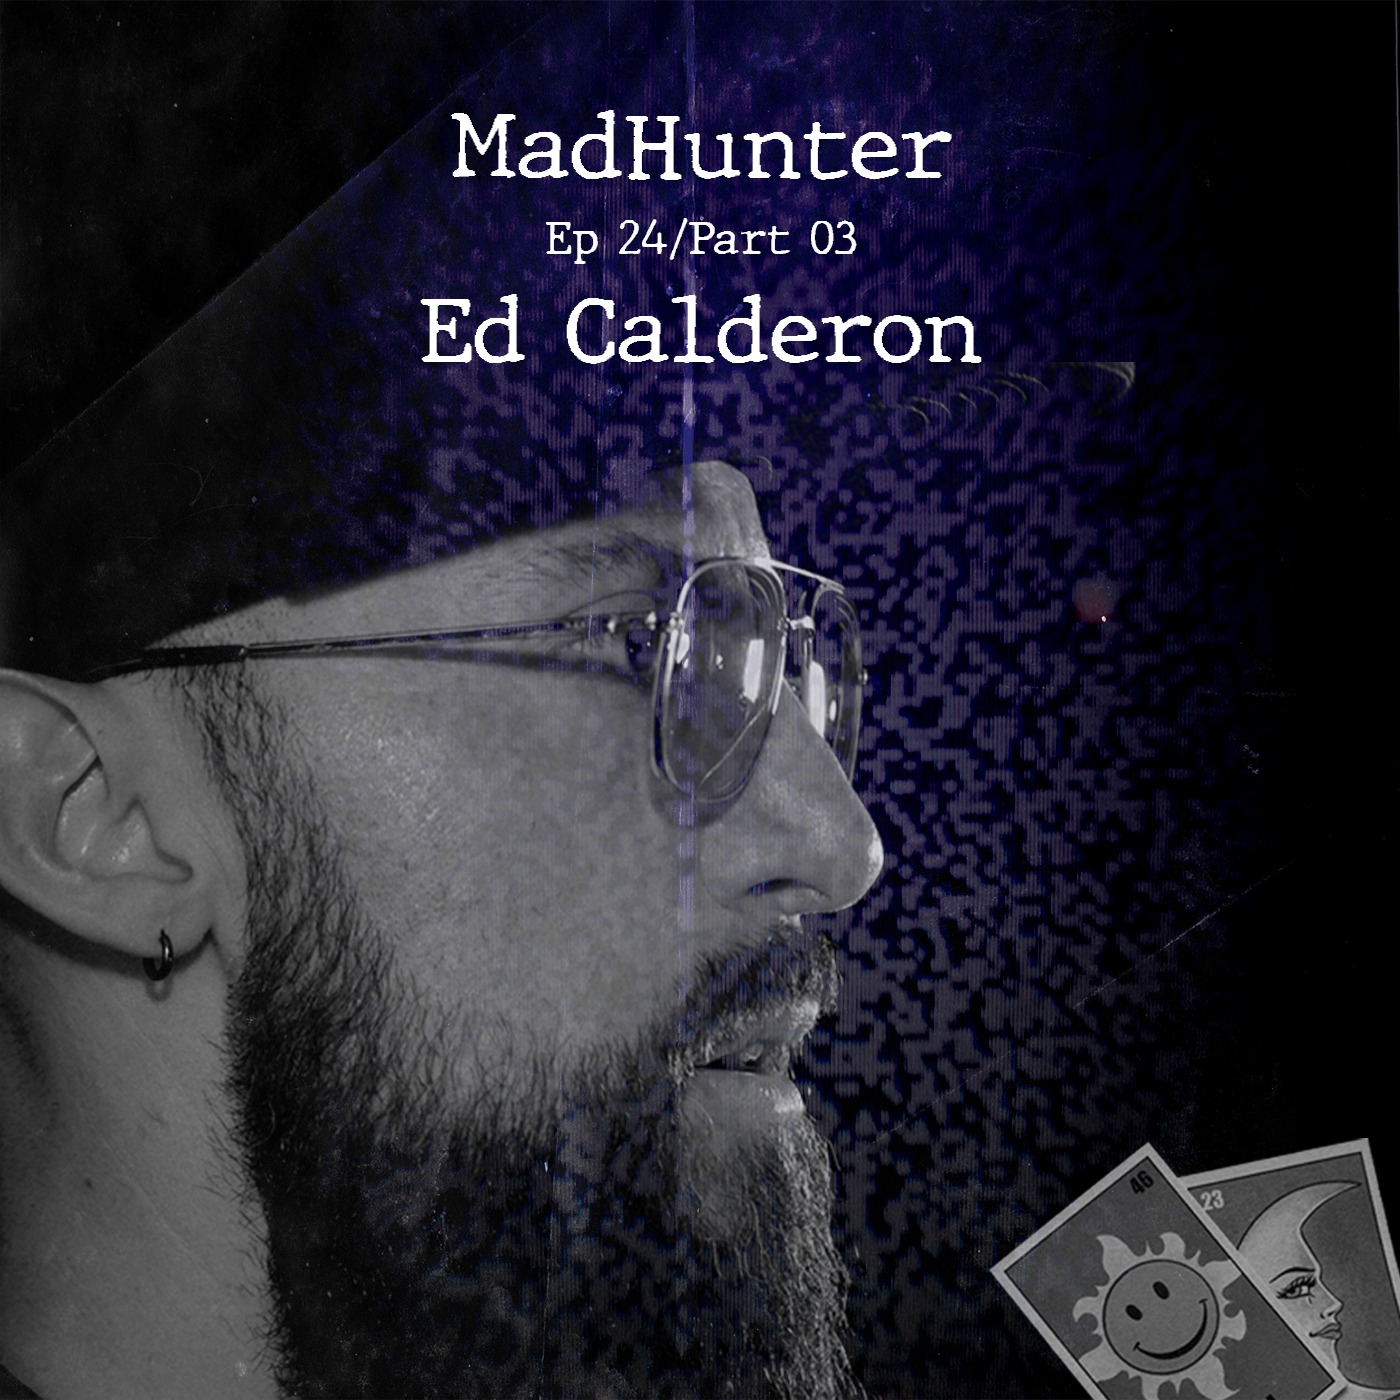 Manifesto radio Ep24 / Part 03 - Guest: MadHunter